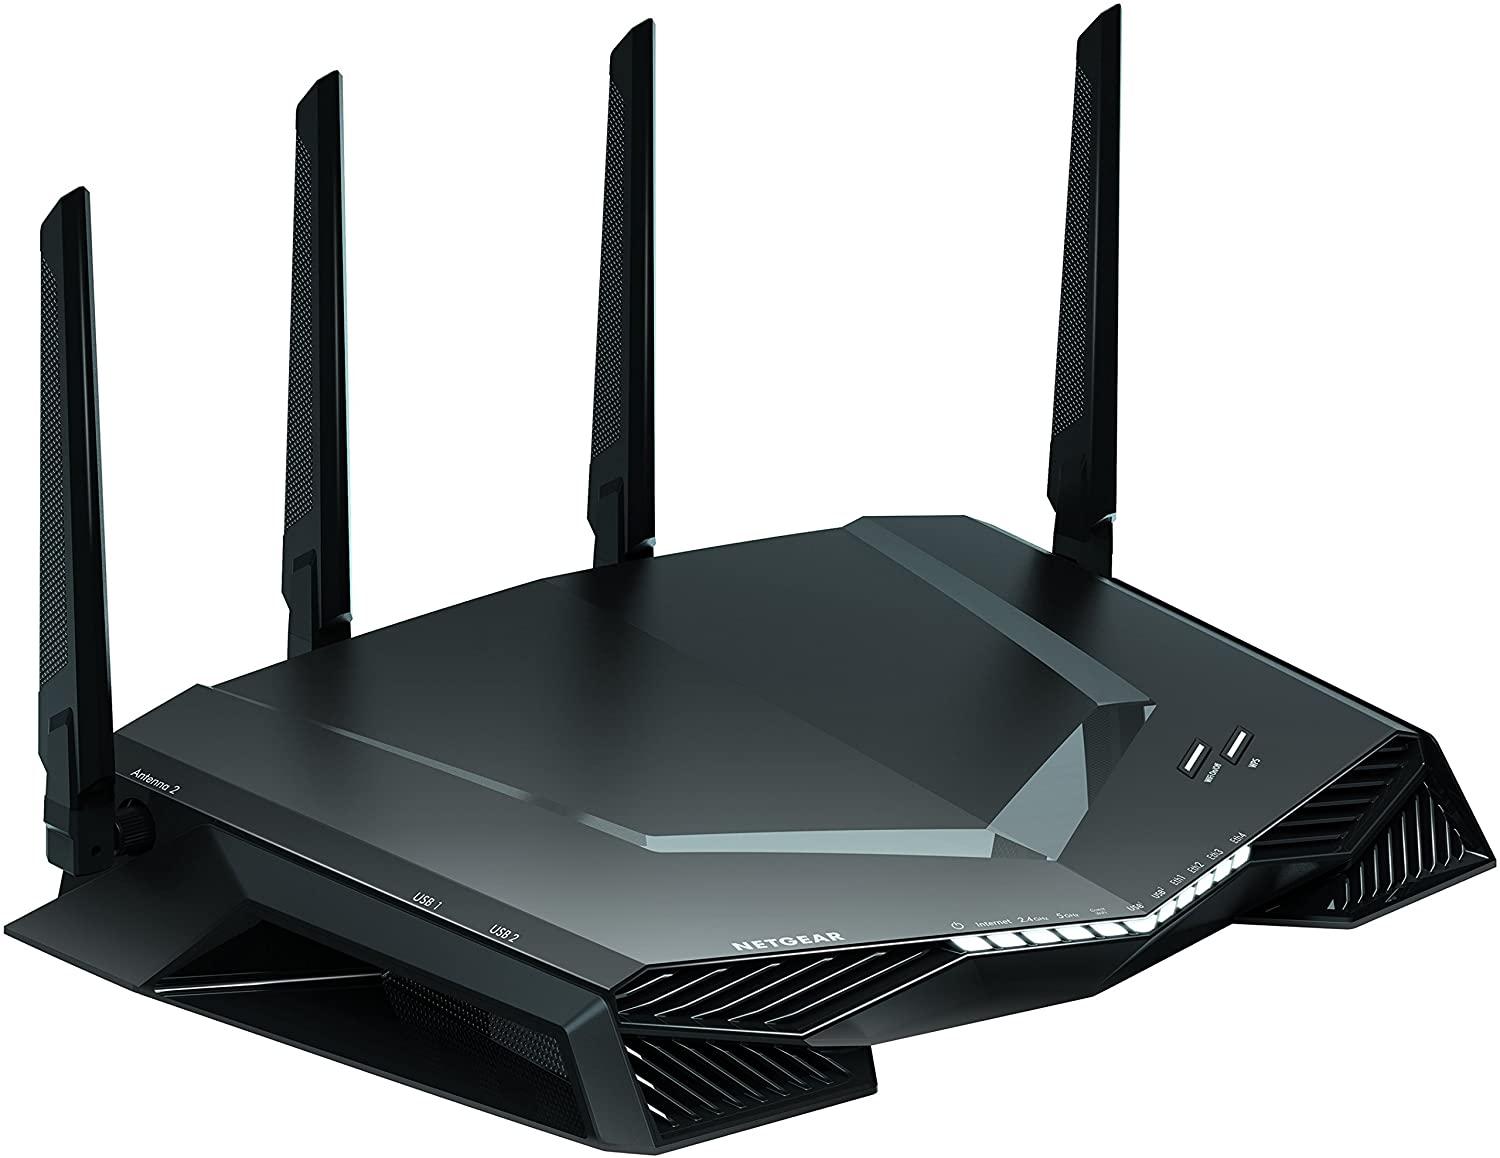 Netgear Nighthawk Pro Gaming XR500 Wi-Fi Router for $159.99 Shipped